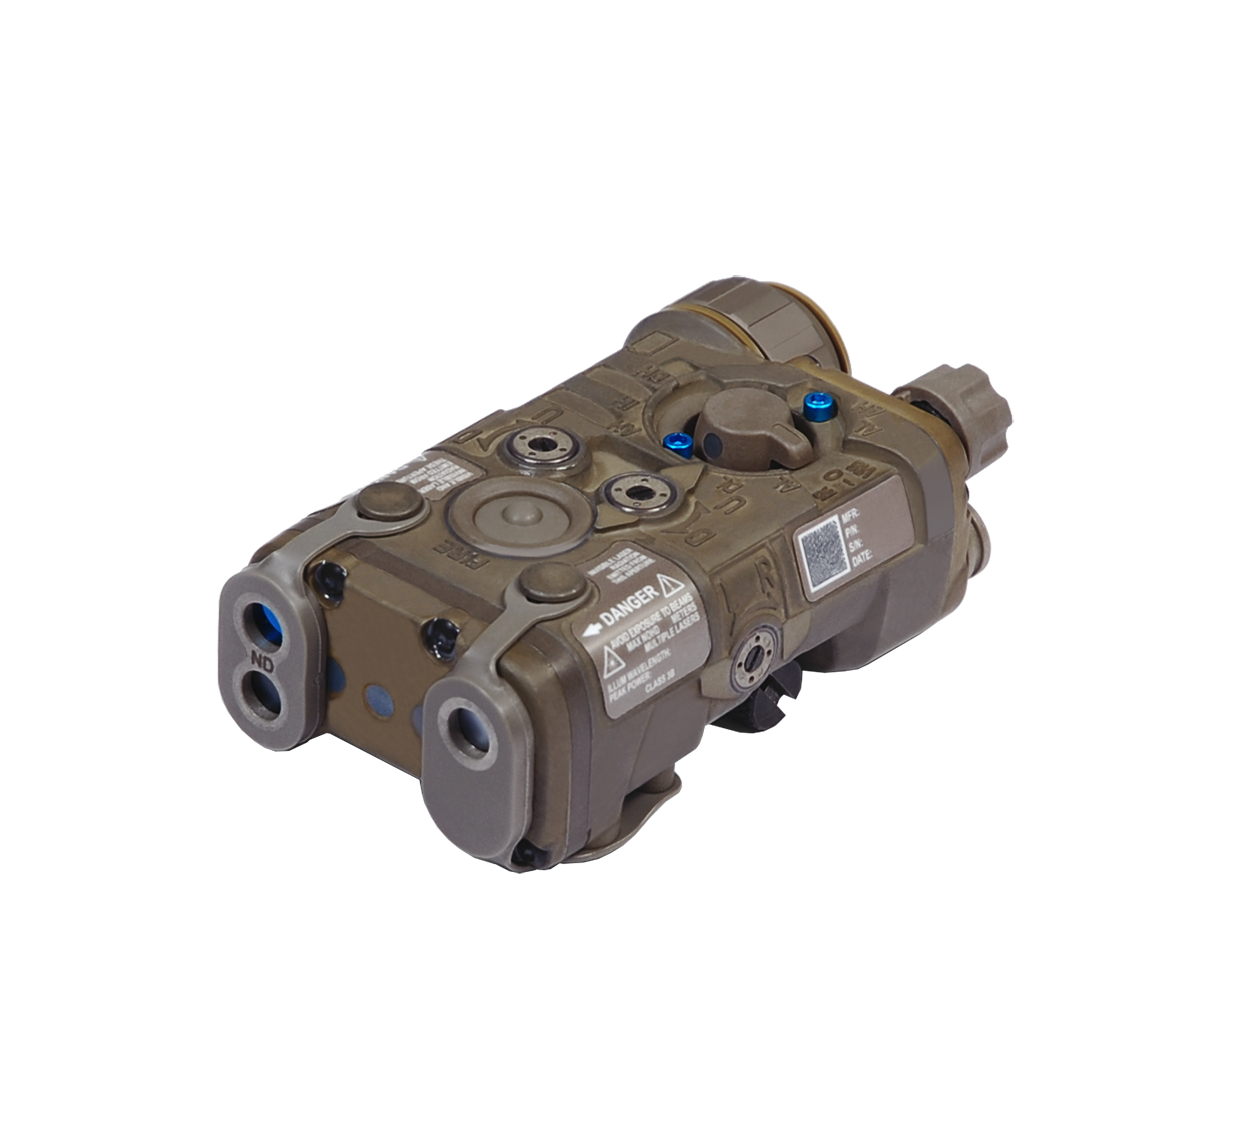 L3Harris Next Generation Aiming Laser (NGAL) - Millbrook Tactical